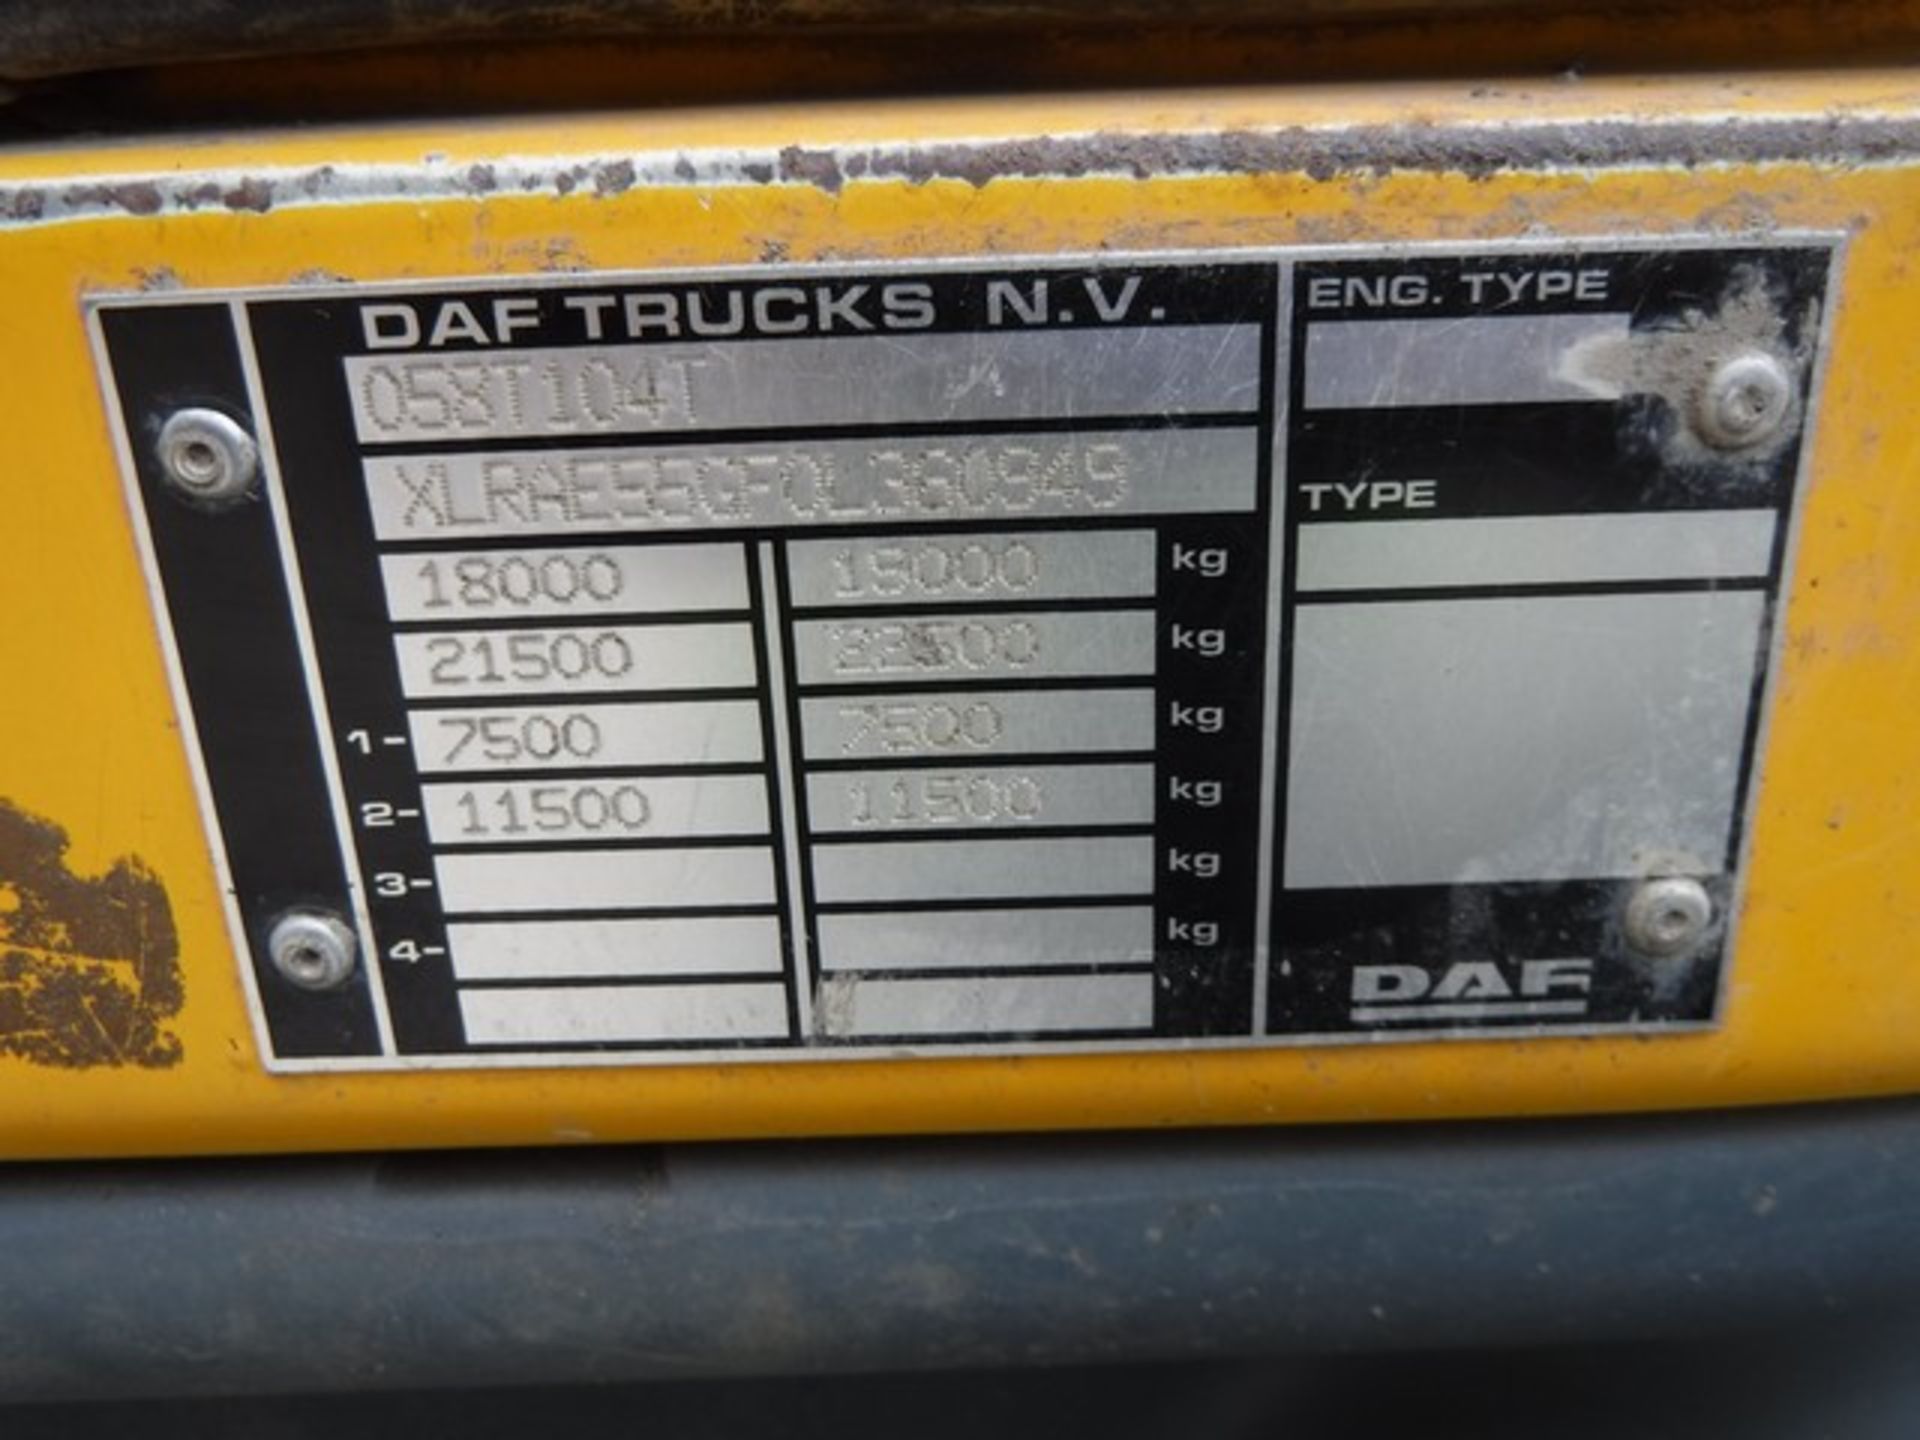 DAF TRUCKS MODEL LF 55.220 18V - 6692cc - Image 16 of 24